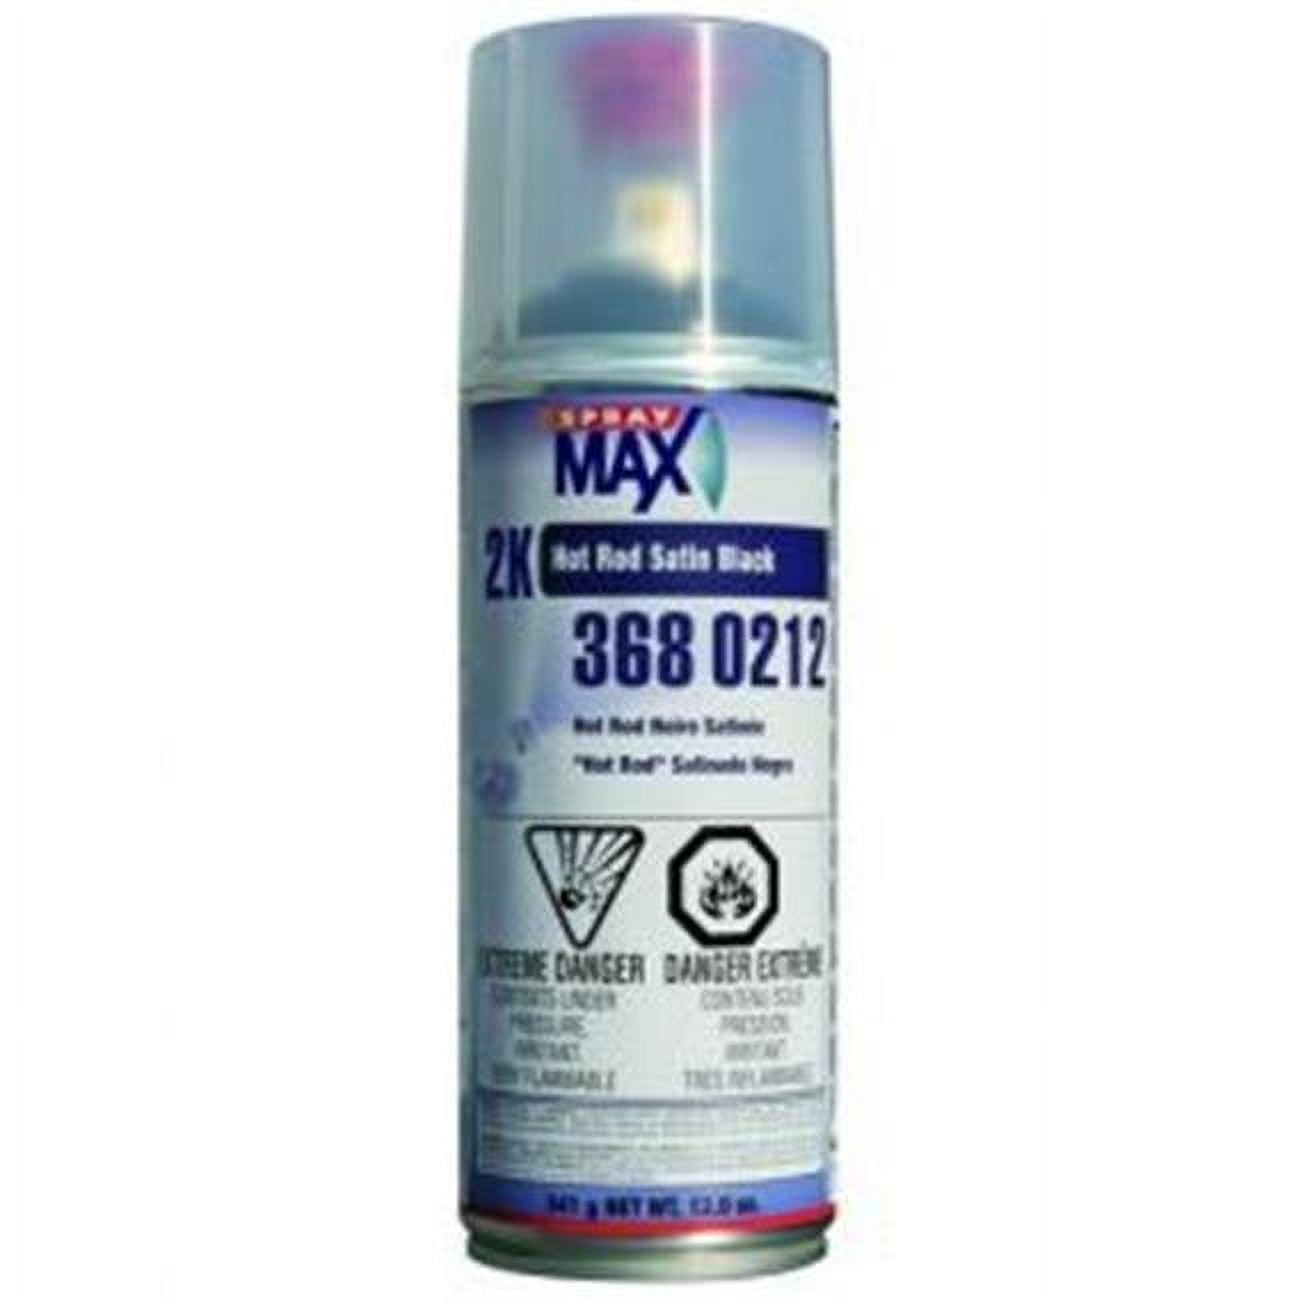 SprayMax Hot Rod Satin Black Paint 2K Urethane, 3680212 - Walmart.com